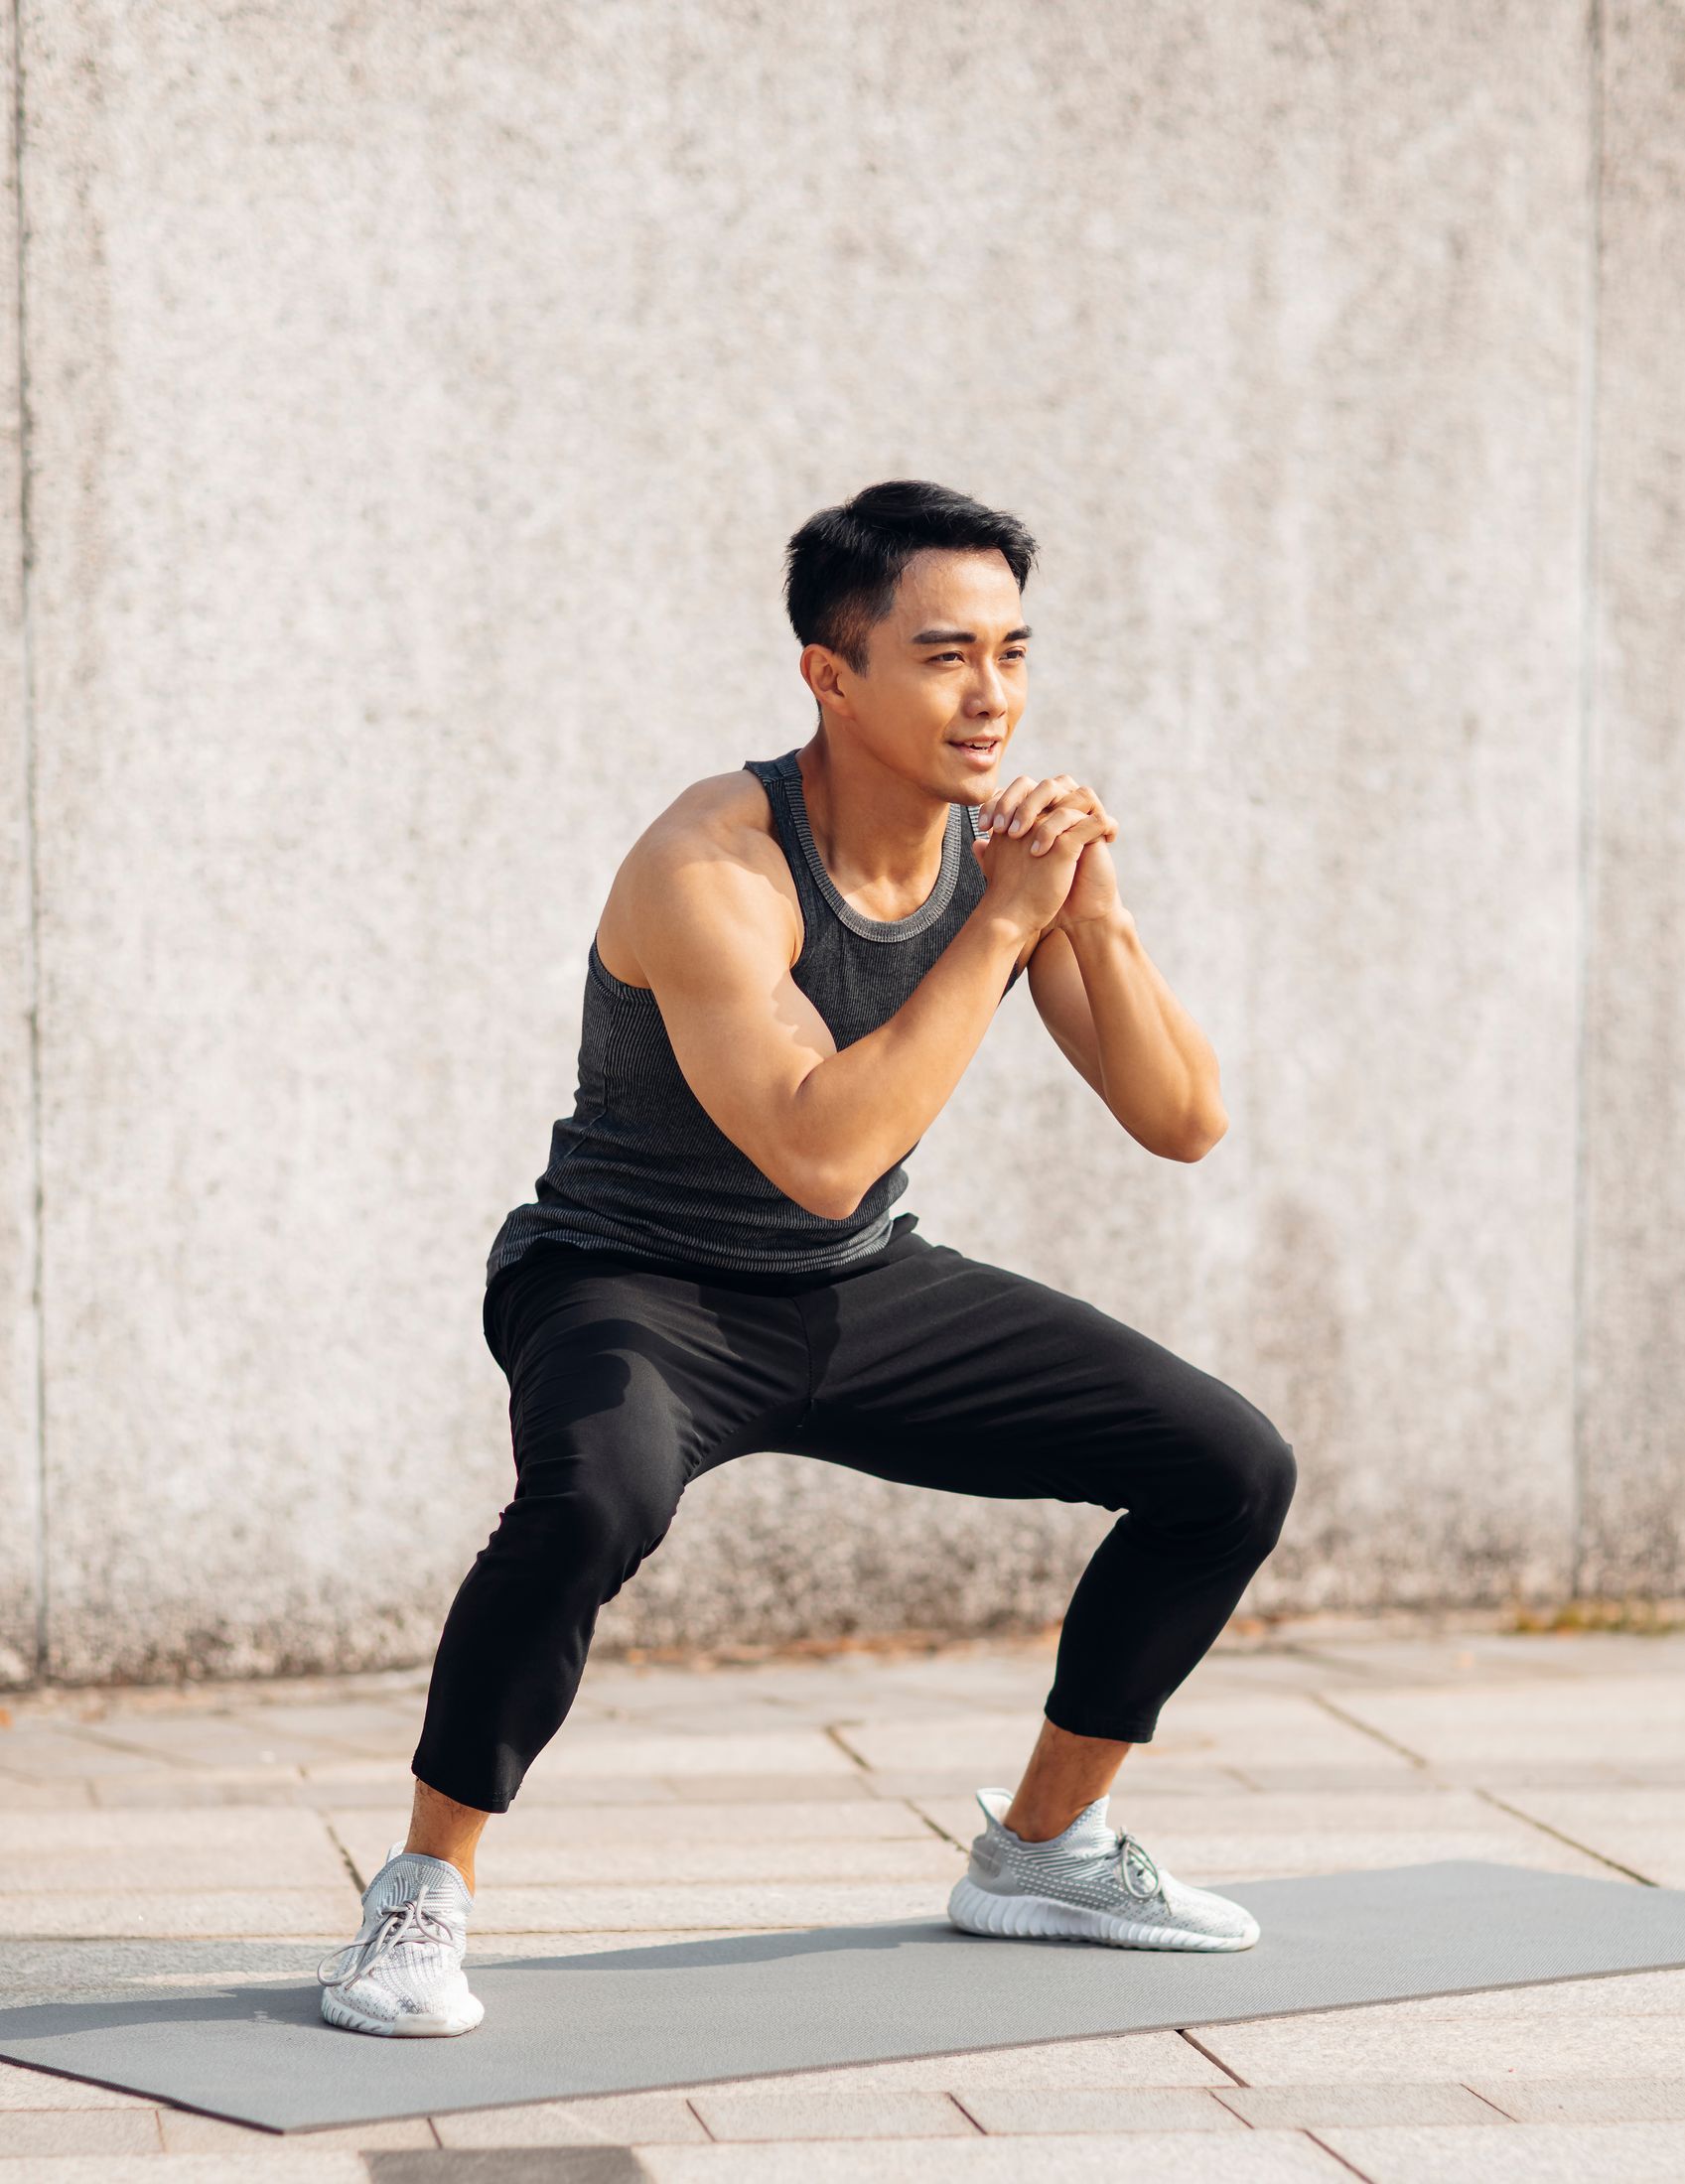 performance medicine ardmore feature - man doing a squat